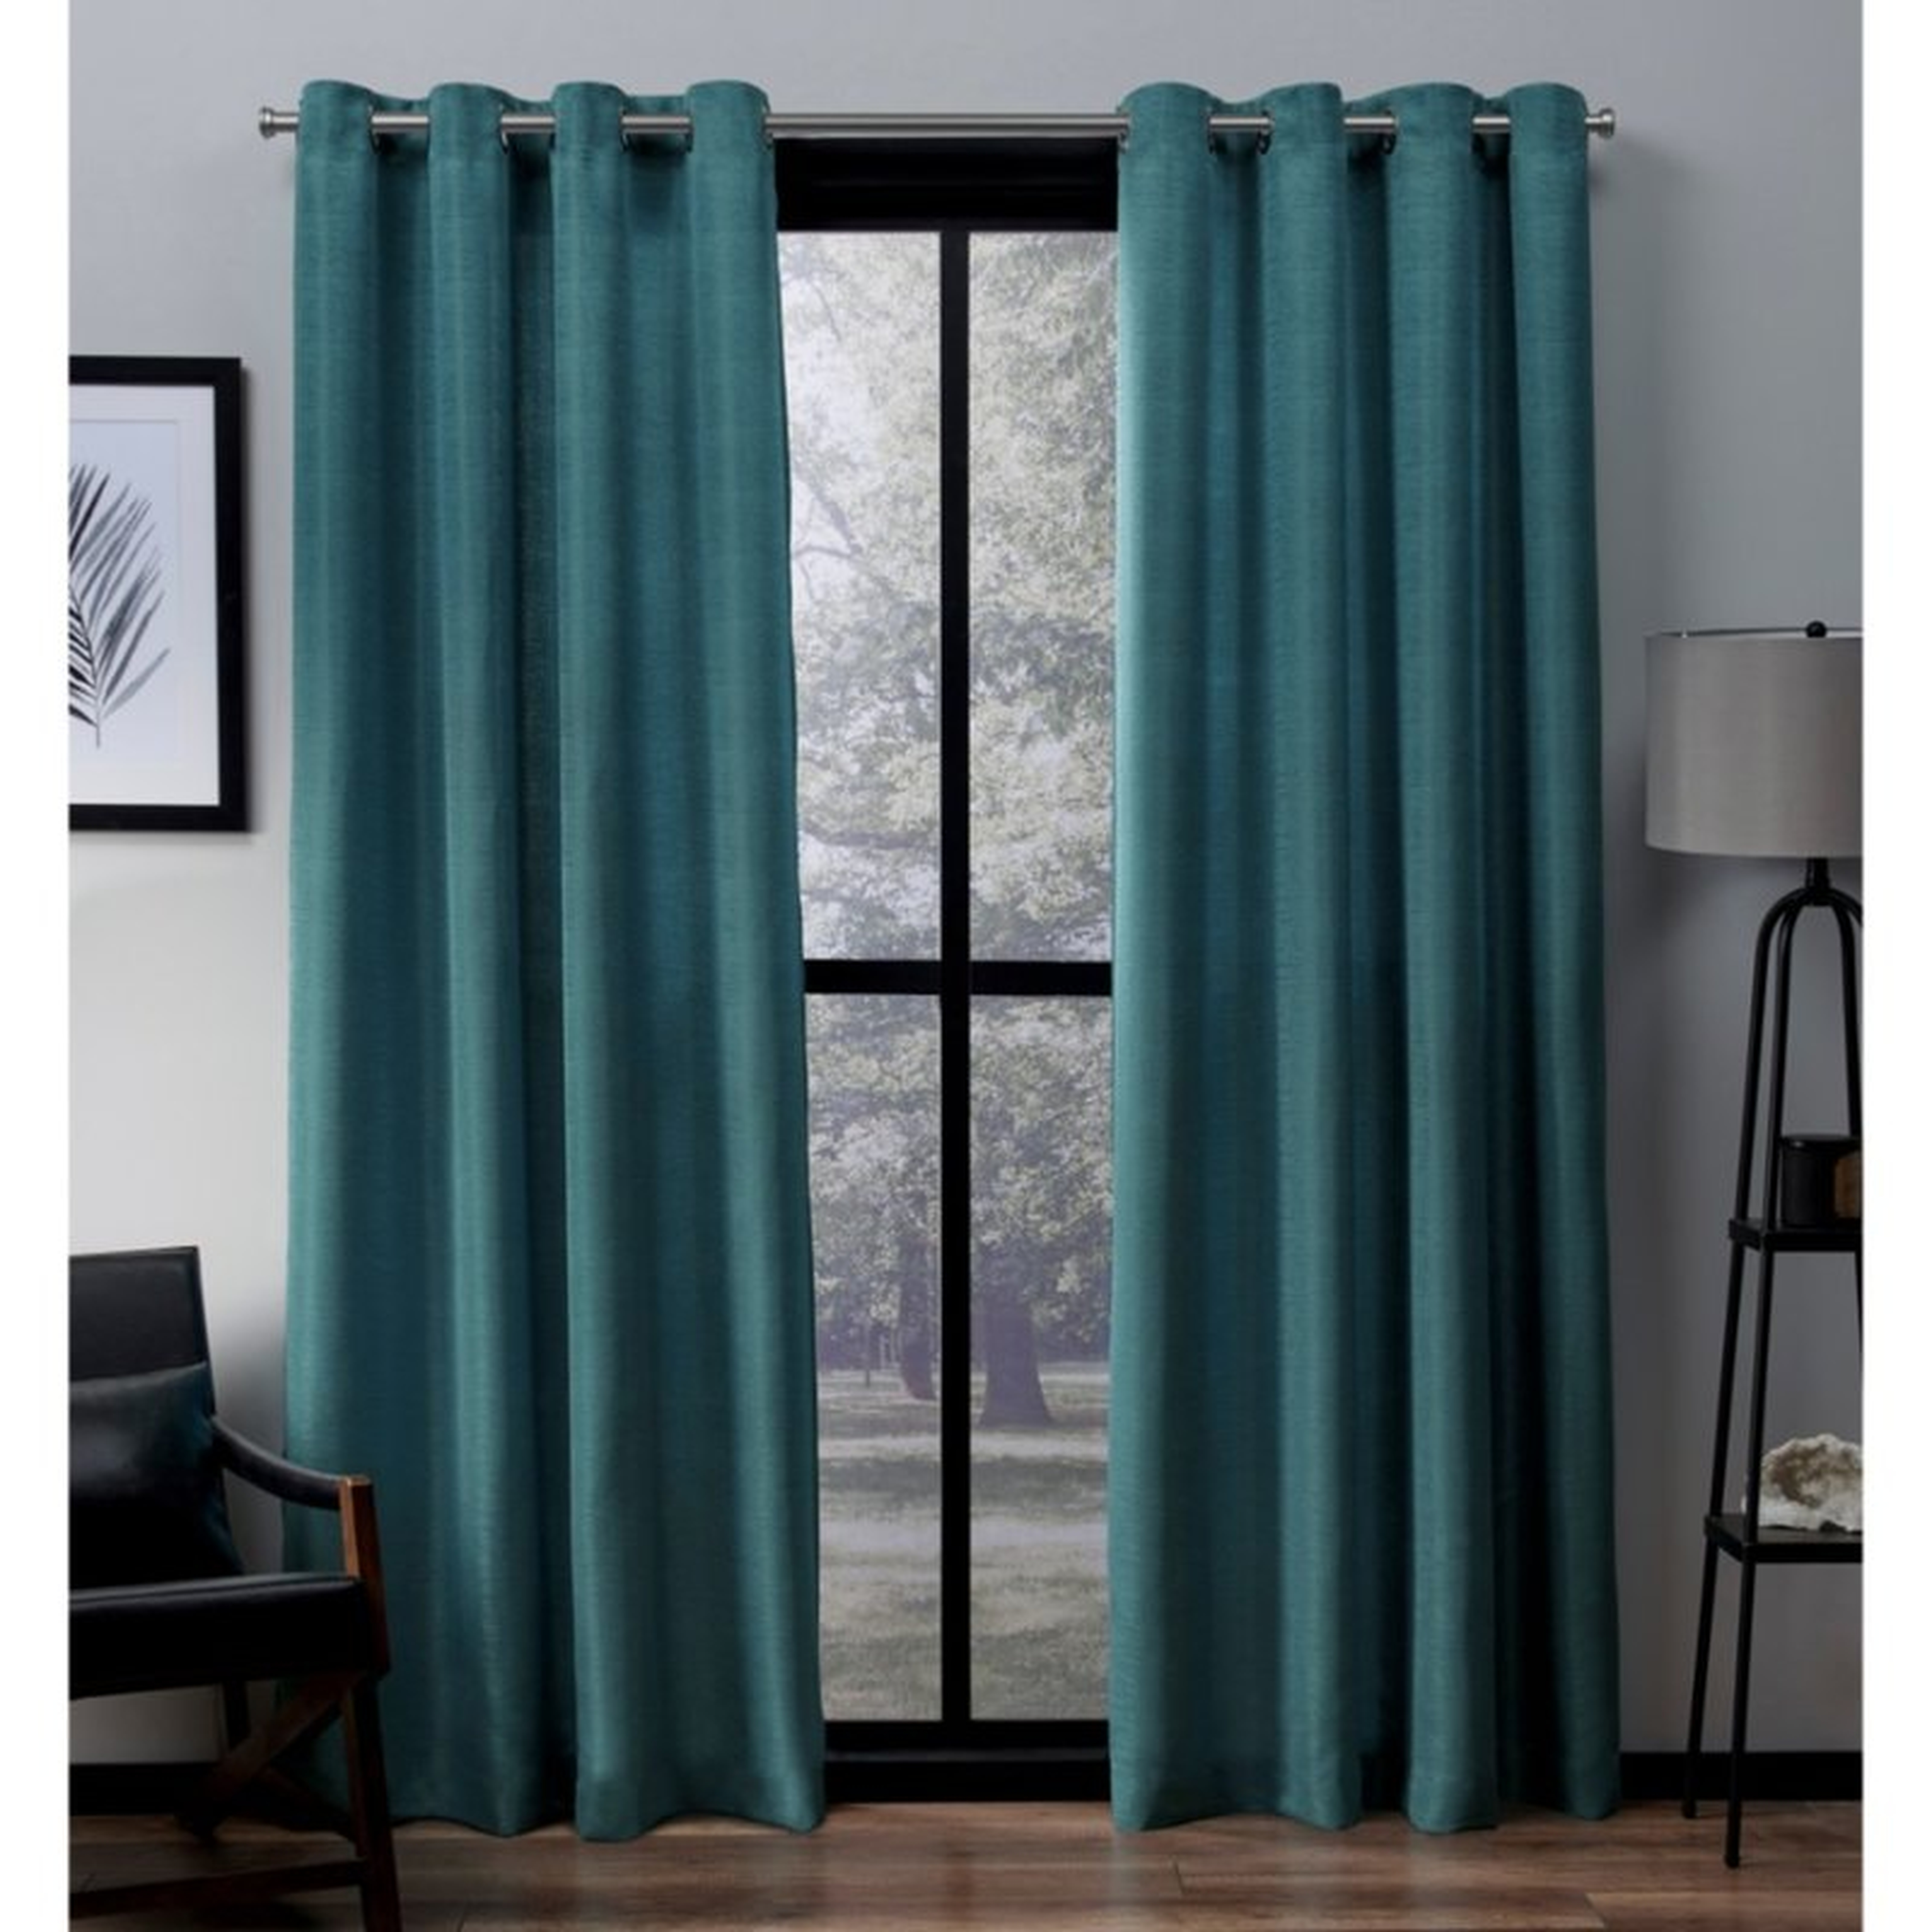 Marnie Solid Light Filtering Grommet Curtain Panels (Set of 2) - TEAL - Wayfair